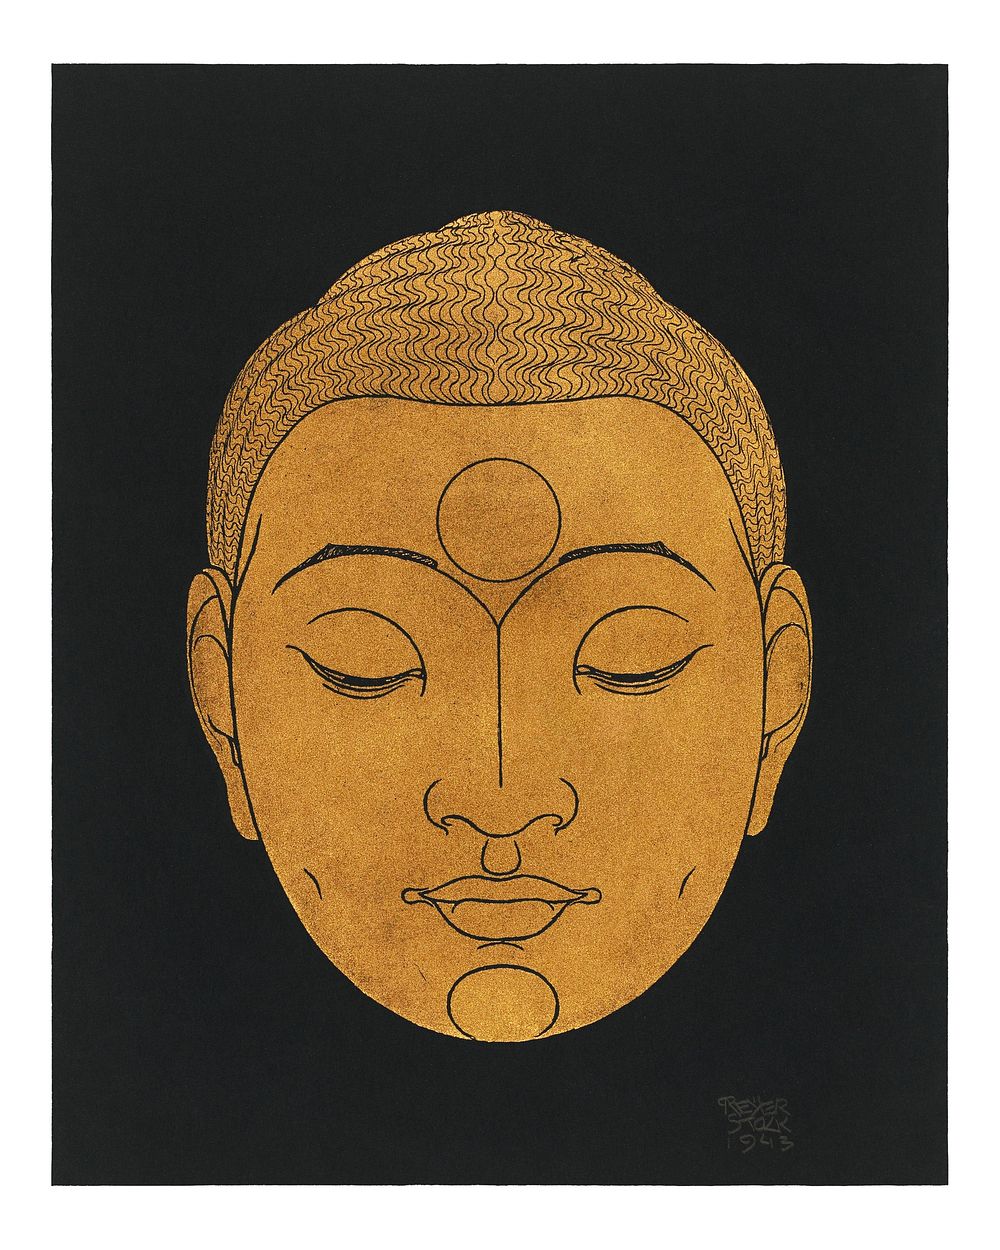 Buddha head poster, vintage art Head of Buddha wall decor, remixed from the artwork of Reijer Stolk